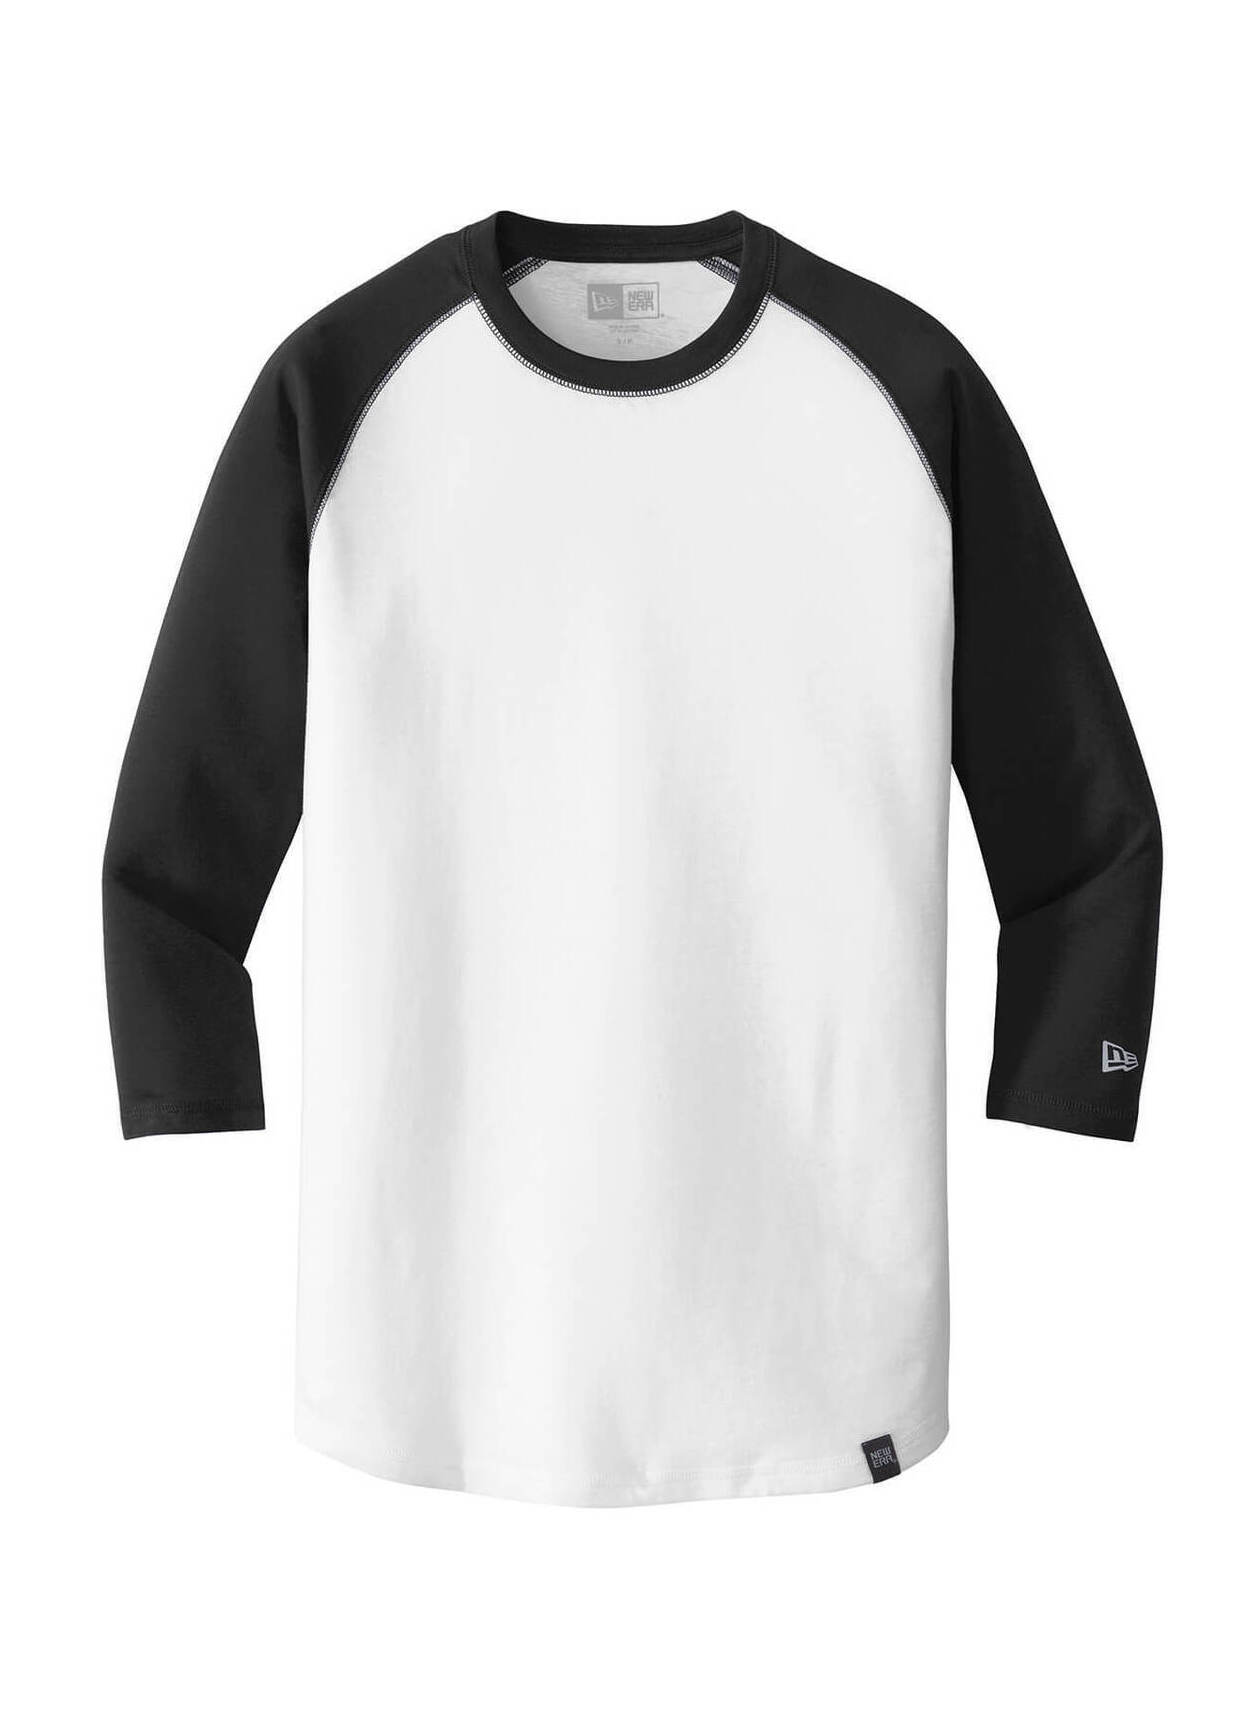 New Era Men's Black / White Heritage Blend 3/4-Sleeve Baseball Raglan T-Shirt